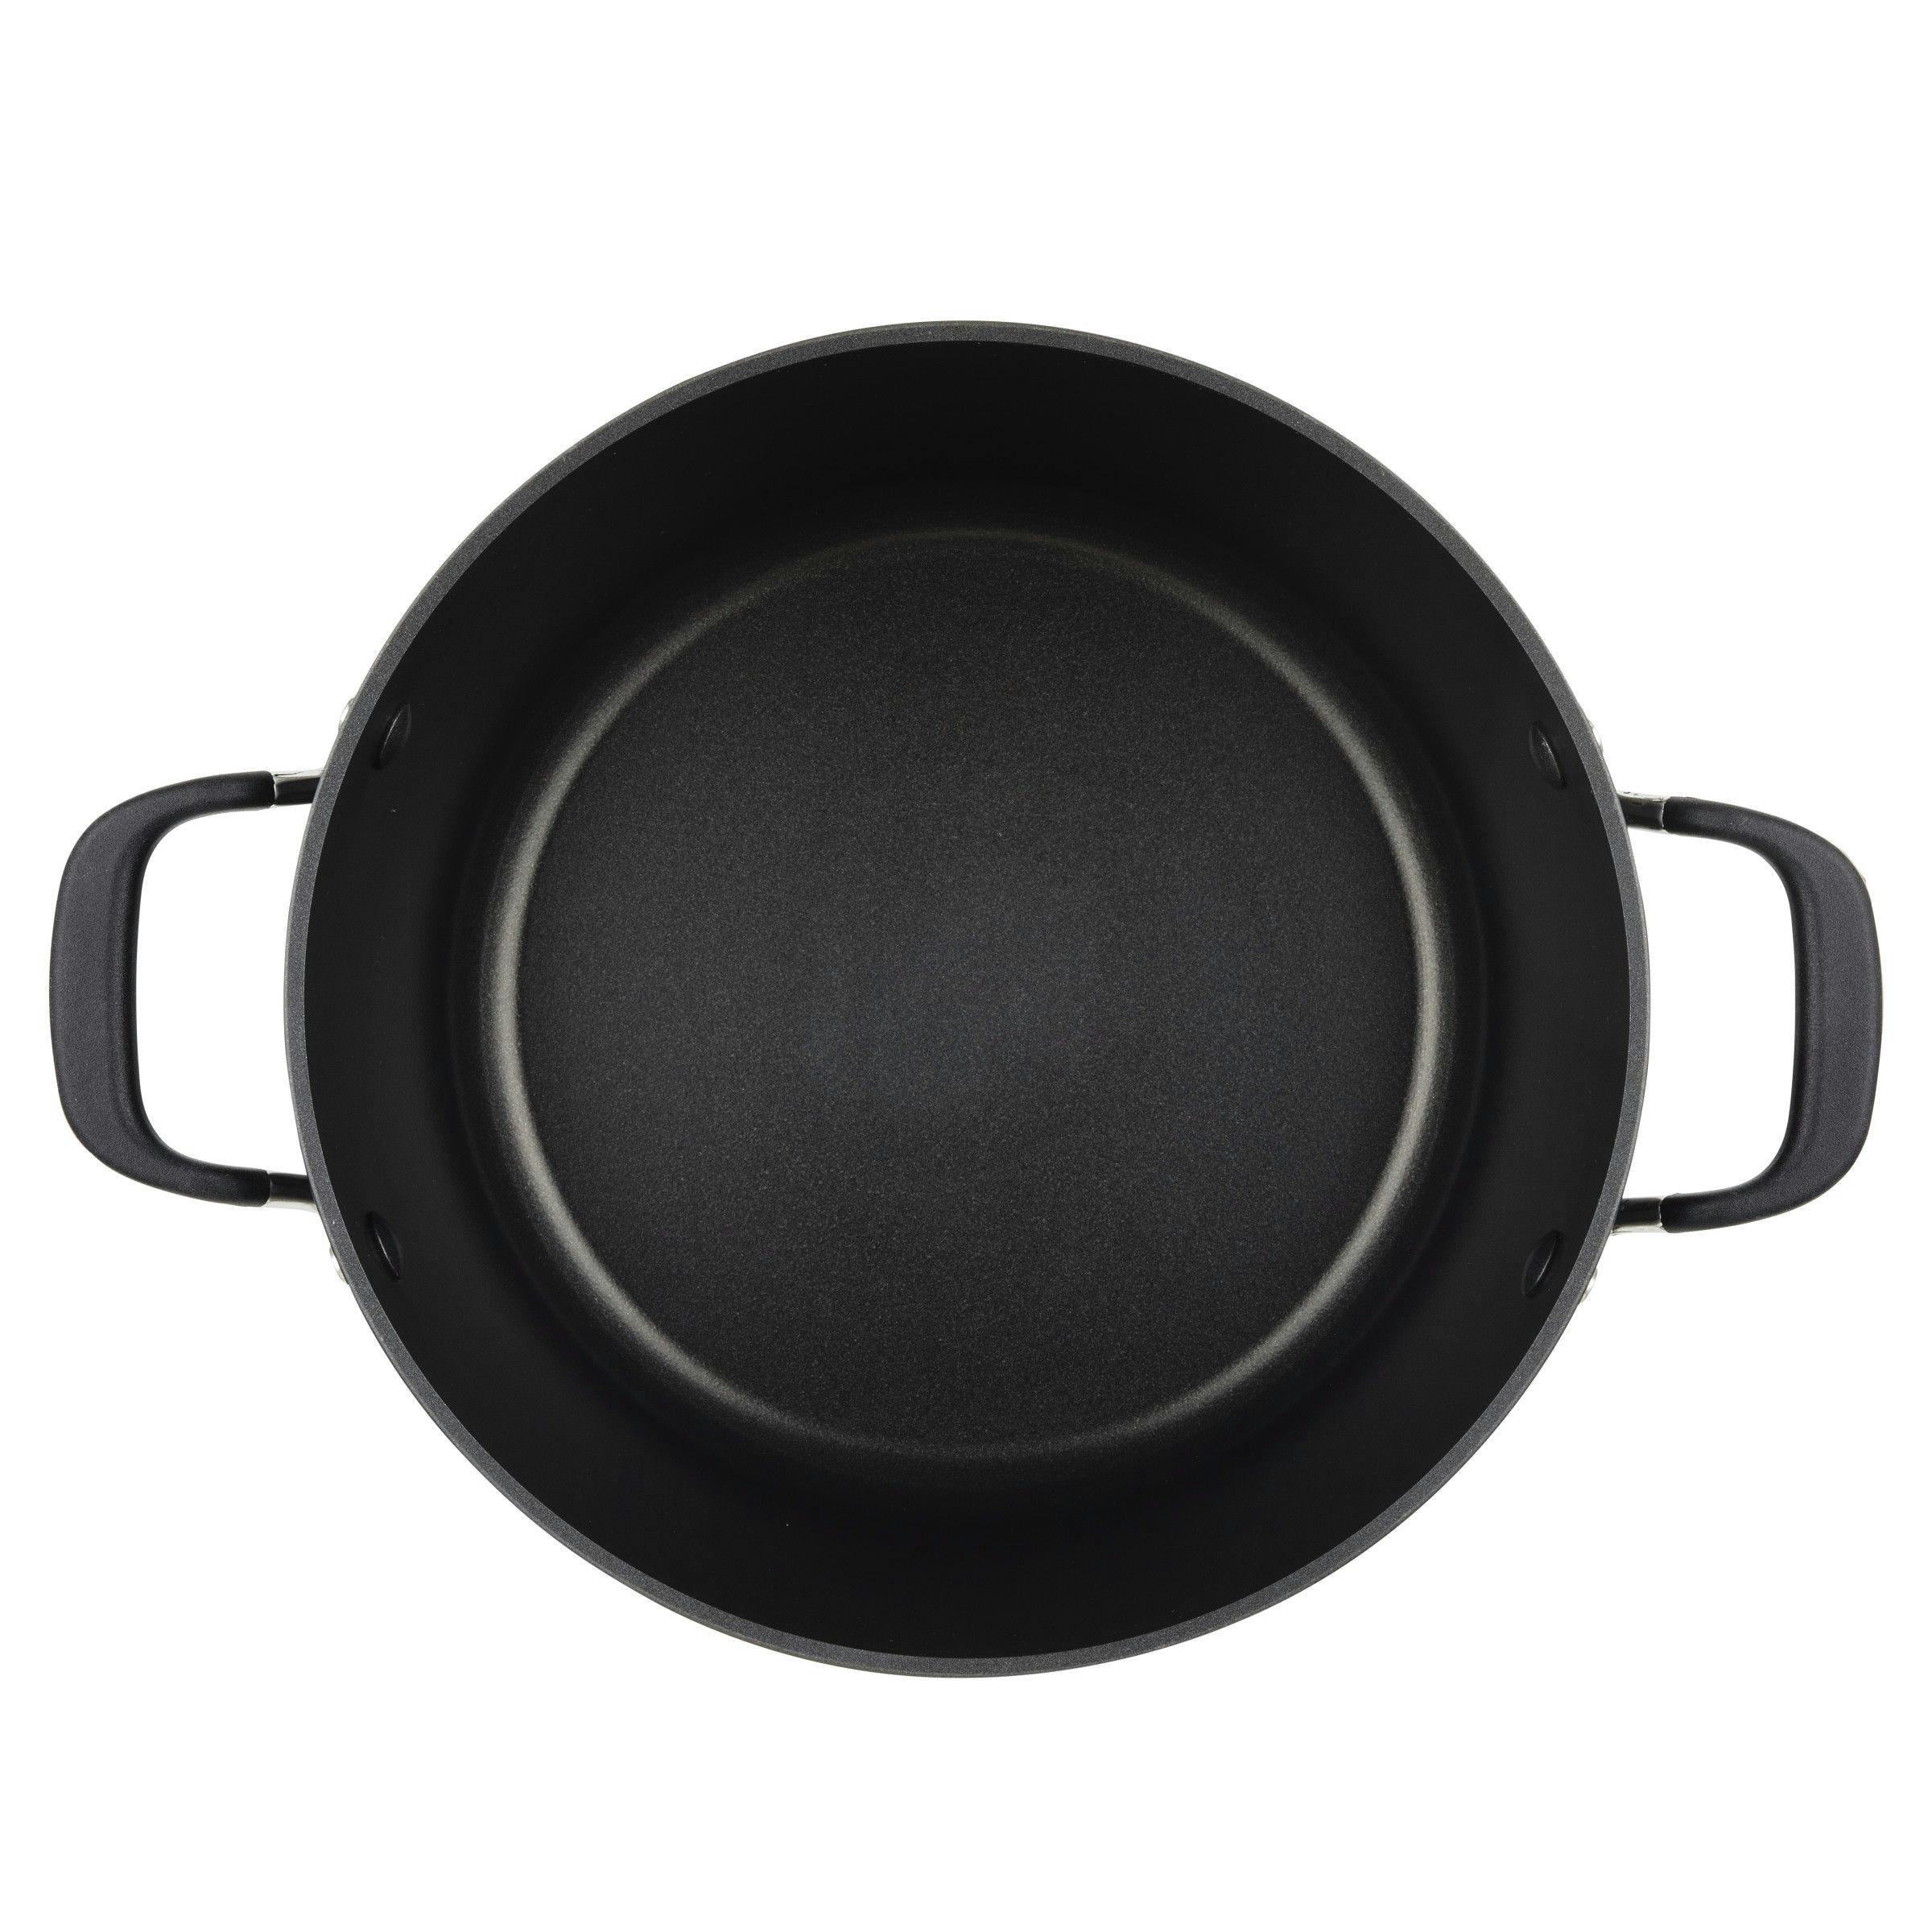 KitchenAid Hard Anodized Nonstick Stockpot with Lid, 8-Quart, Onyx Black